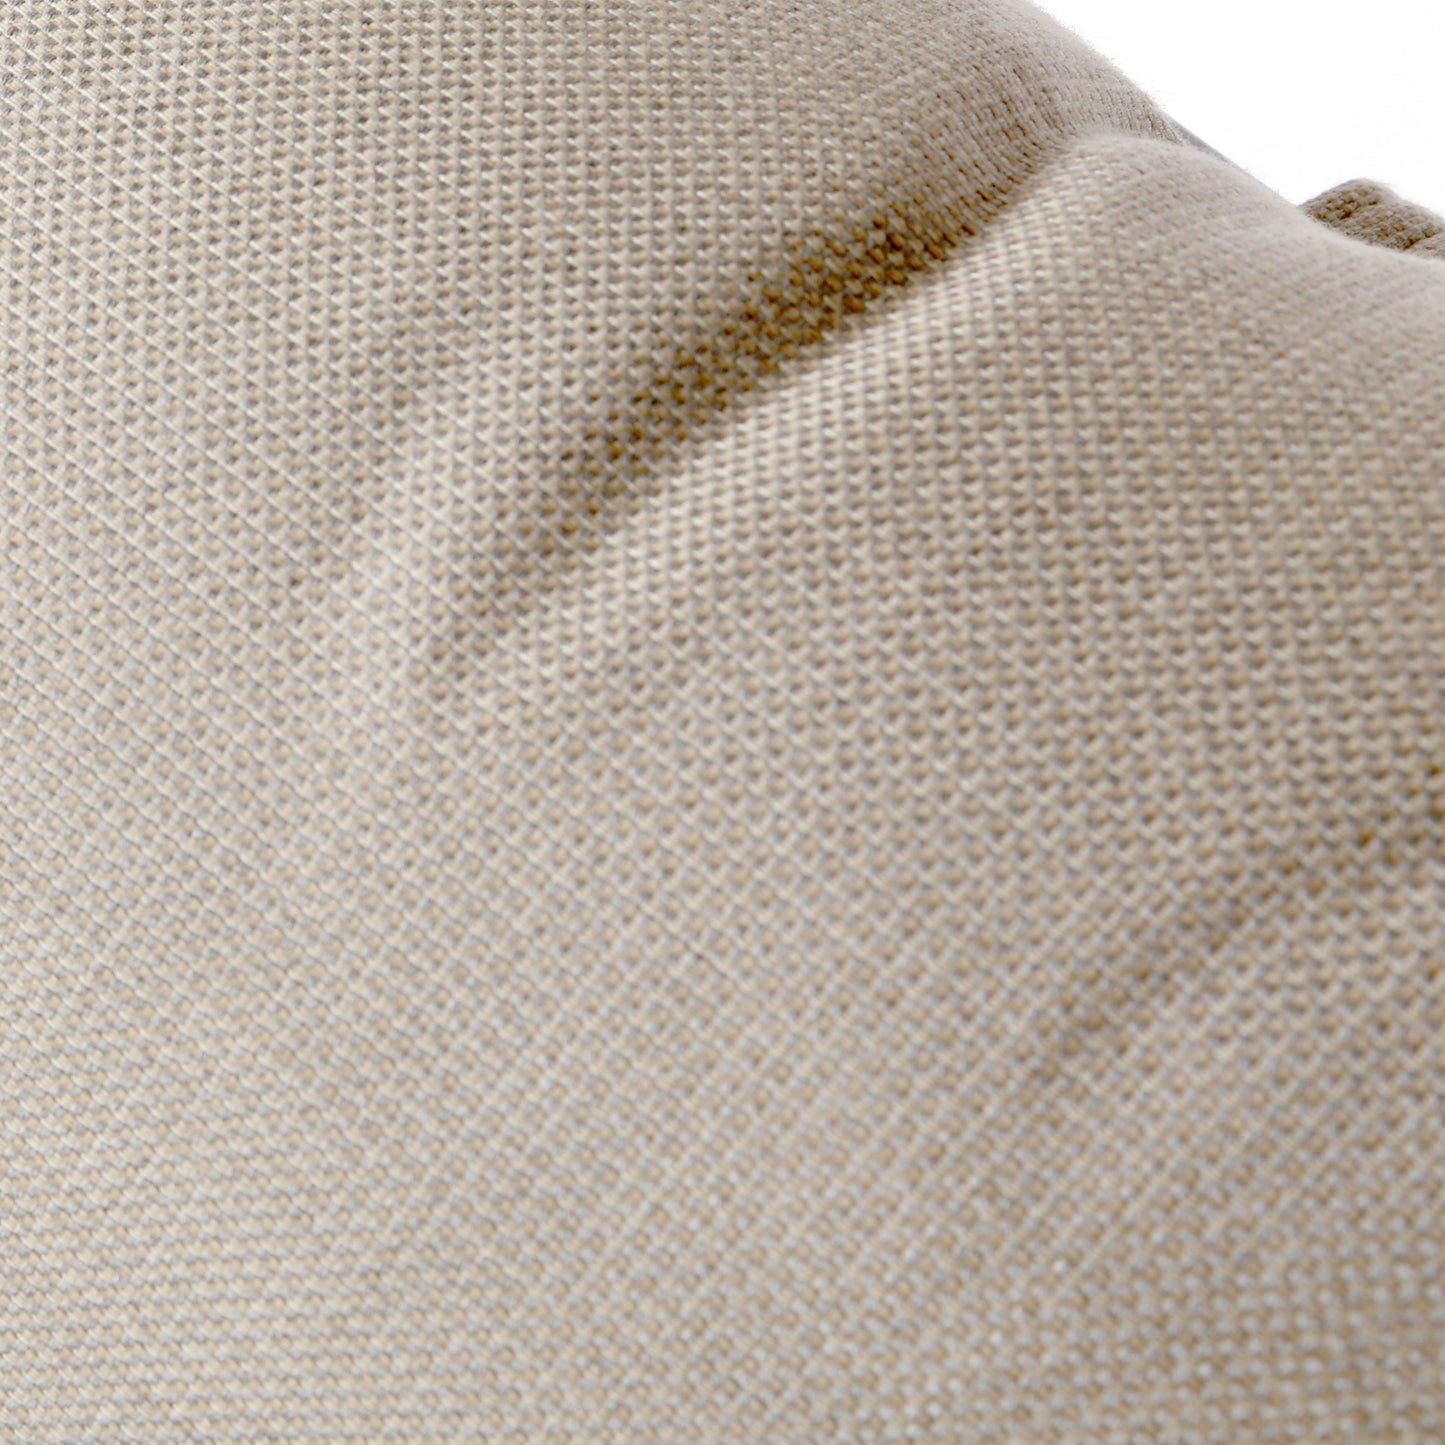 Brooklyn Recliner Fabric Detail, image 5